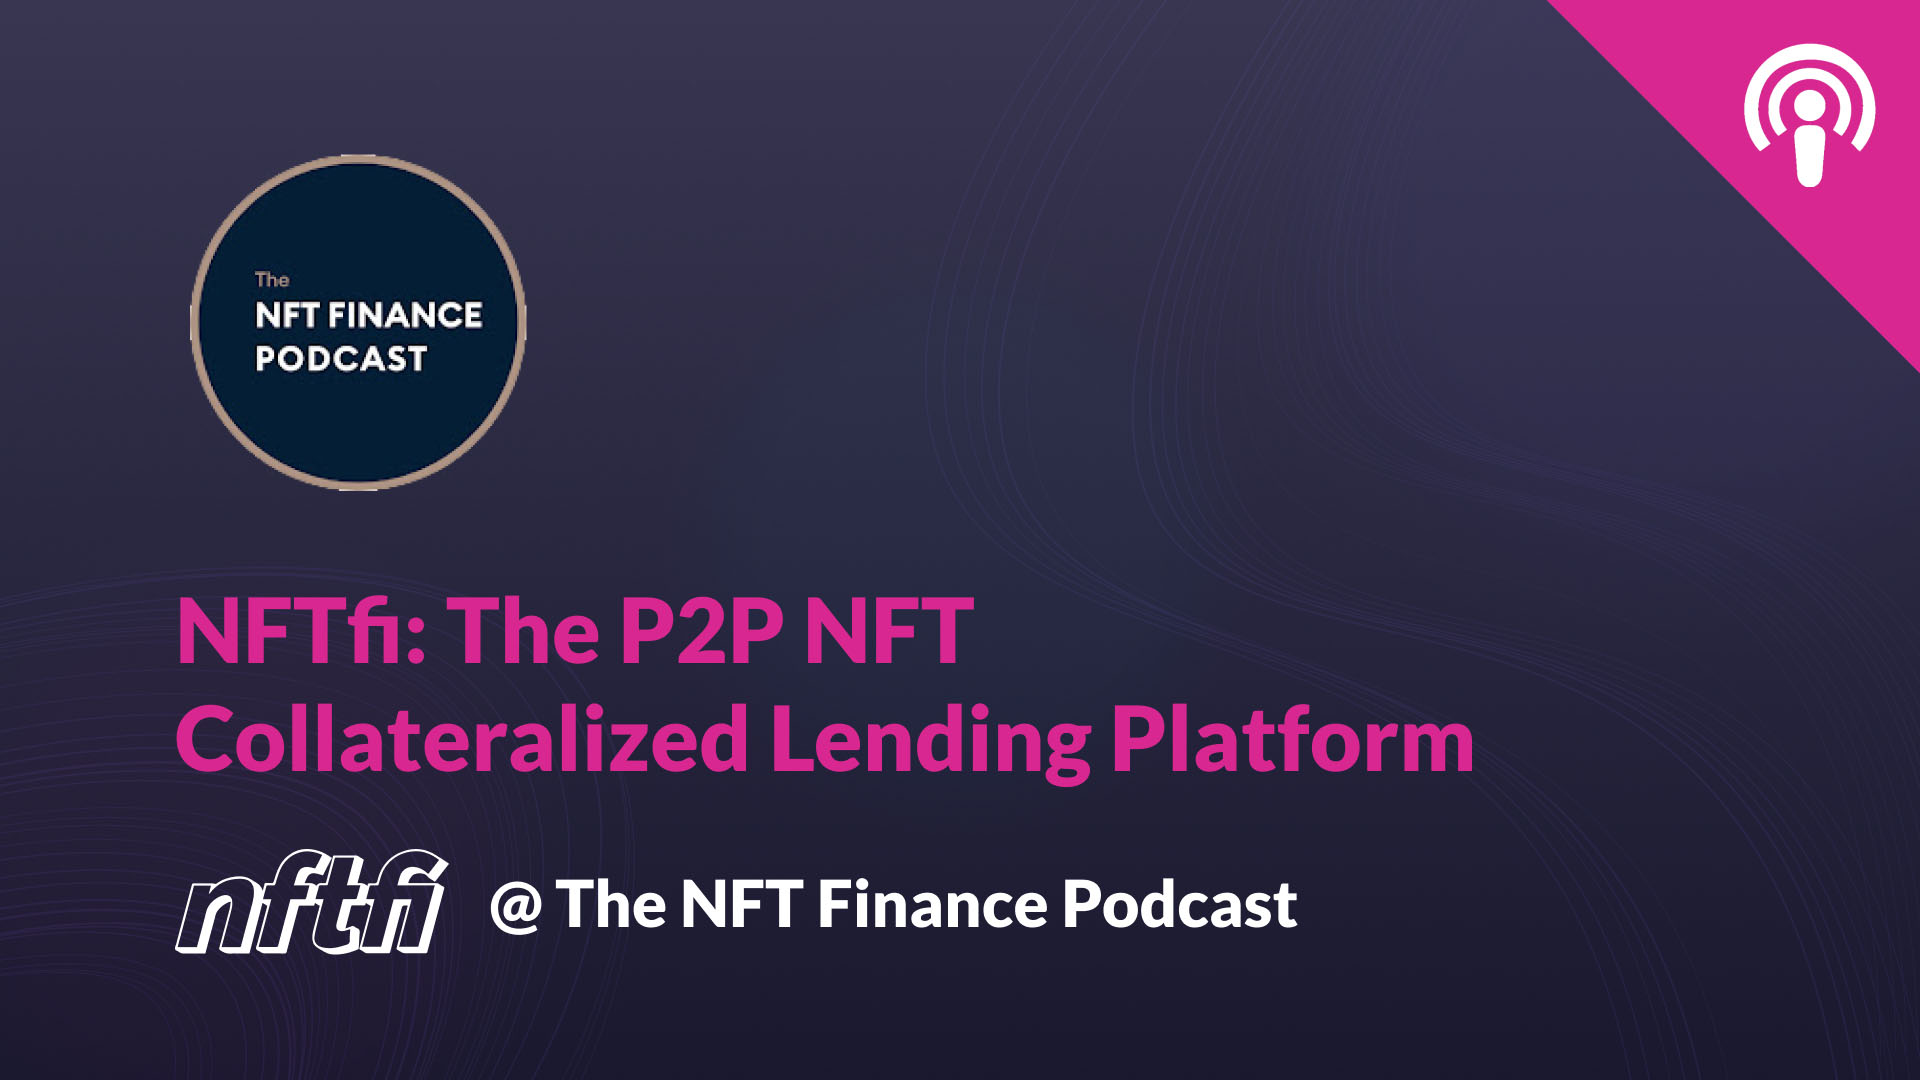 NFT finance podcast NFTfi